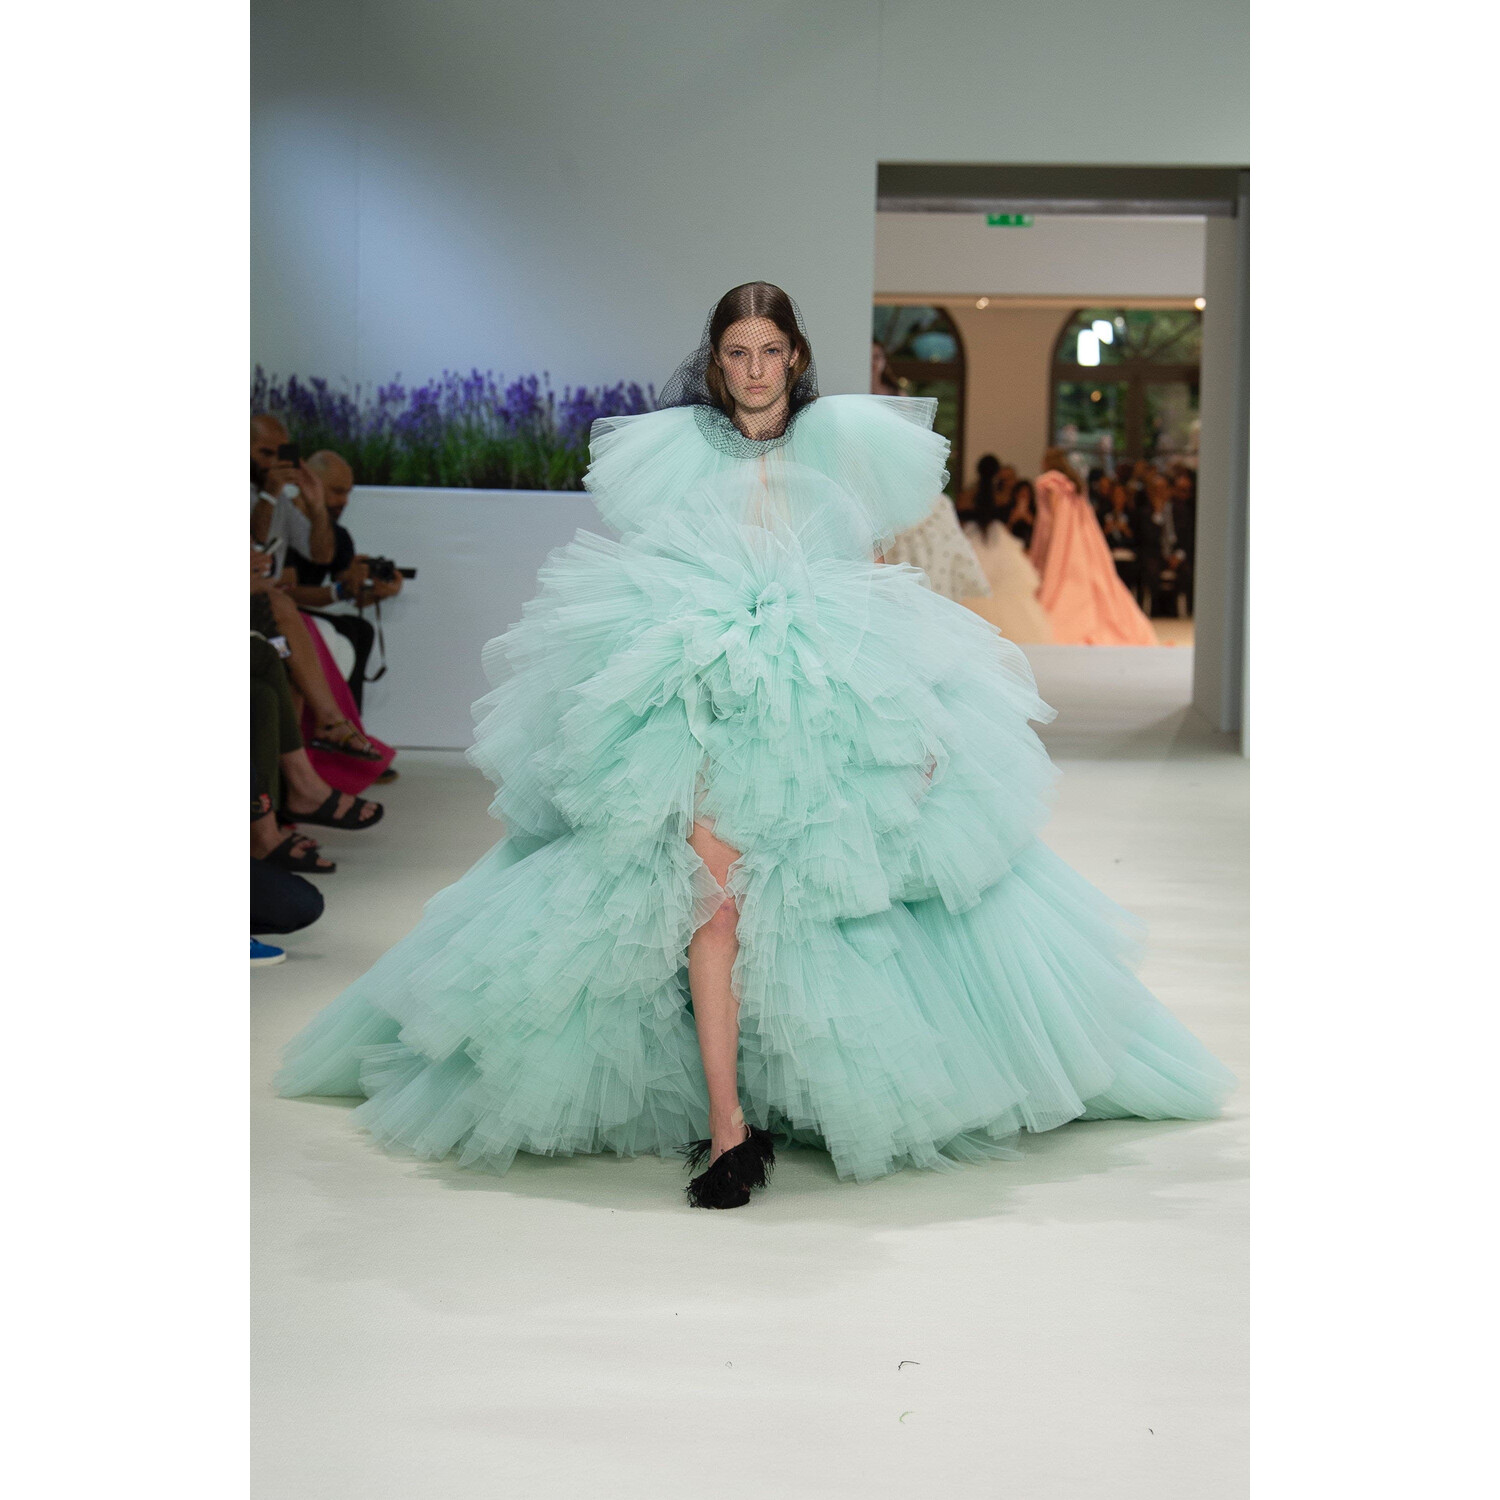 Фото Giambattista Valli Fall 2018 Couture Collection / Giambattista Valli Осень 2018 Кутюр коллекция